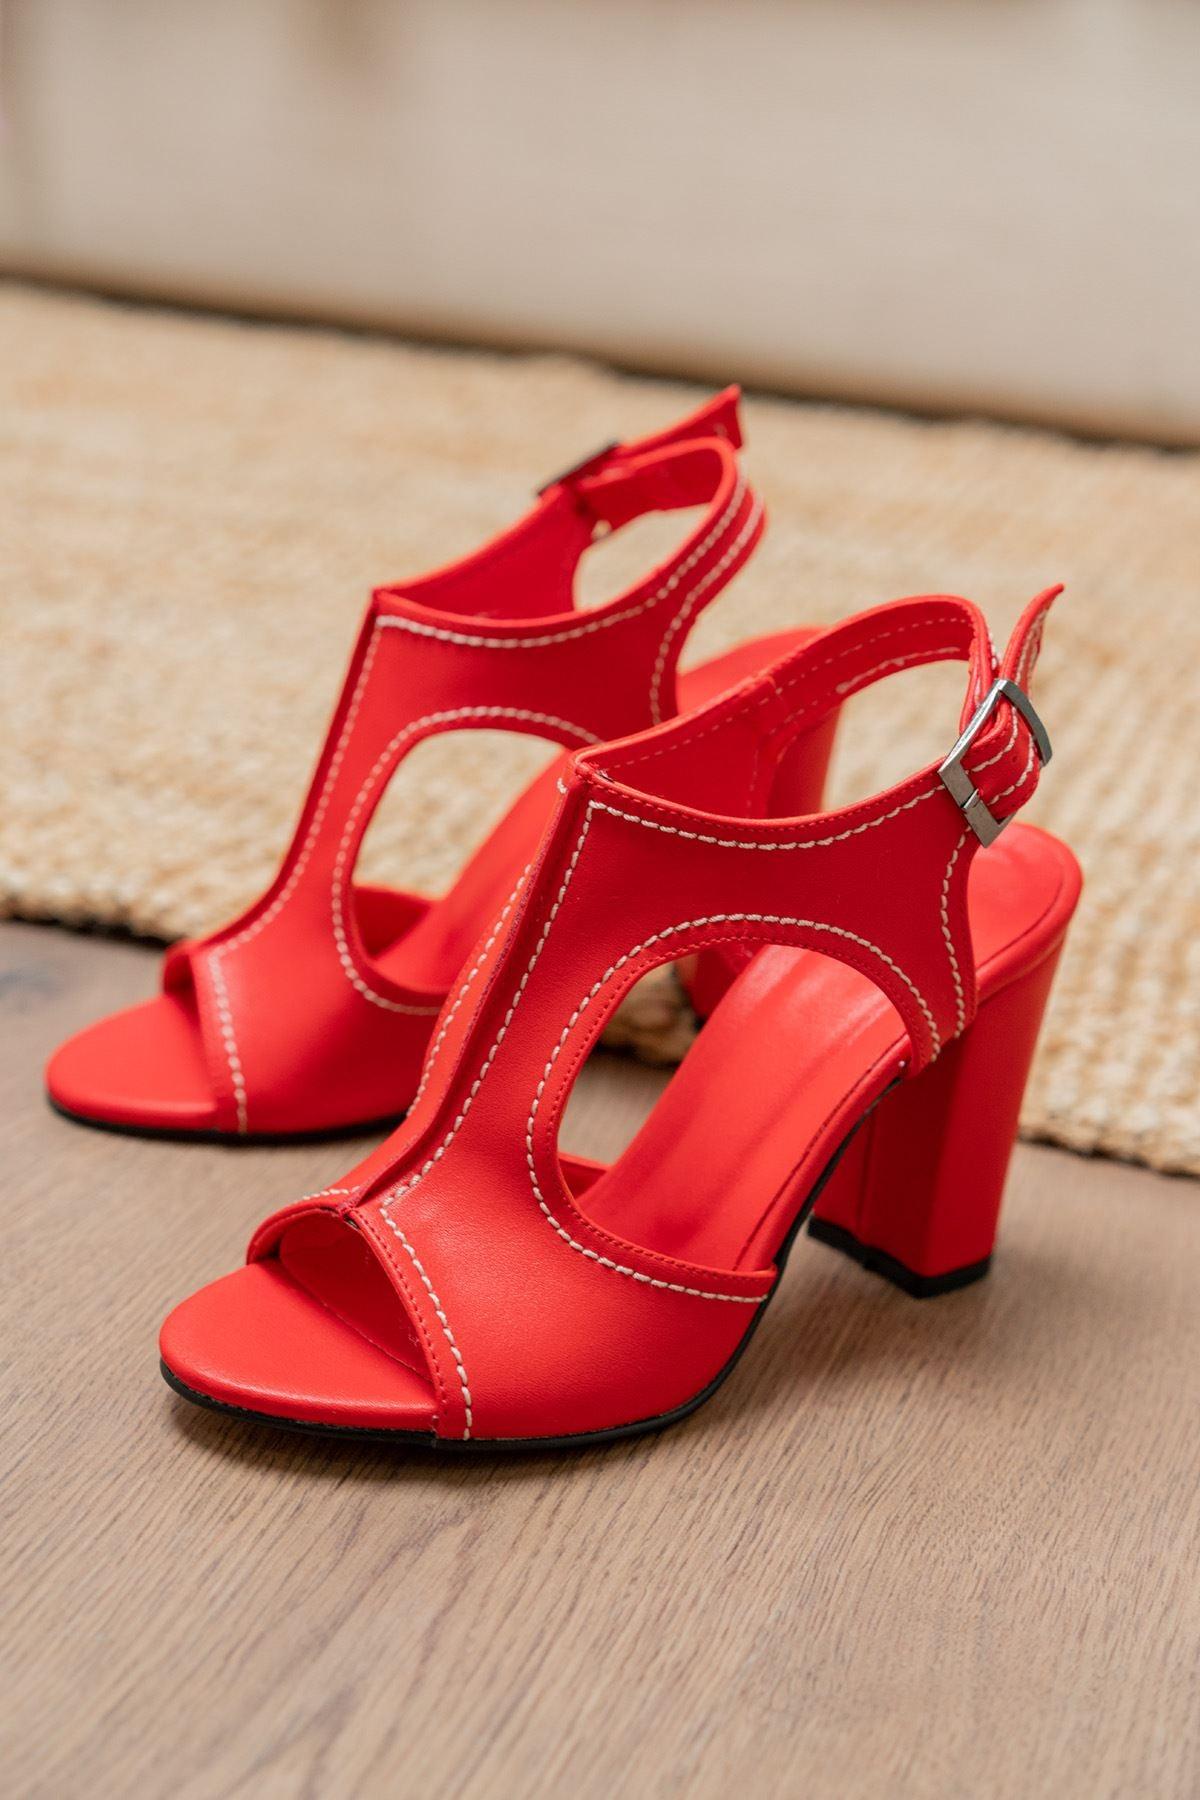 Orisha Red Skin Heels Women's Shoes - STREET MODE ™